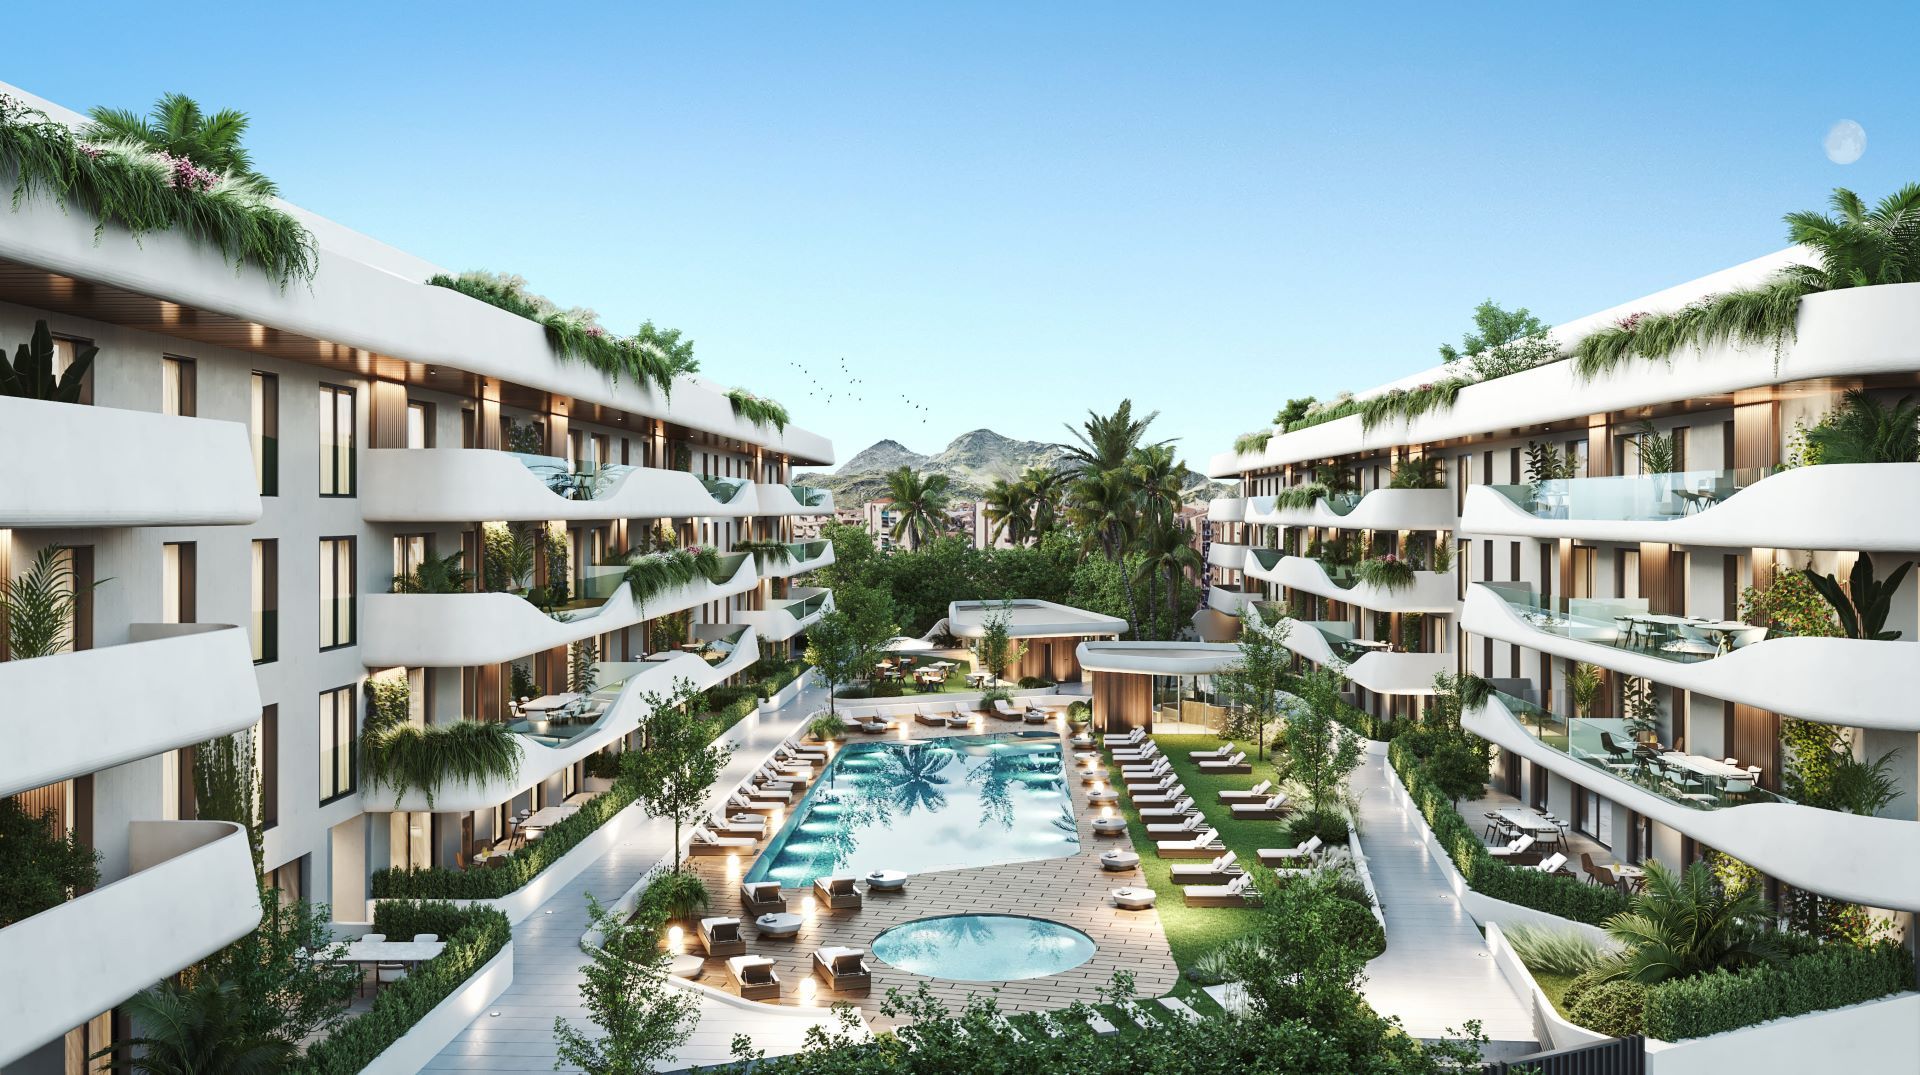 Off-Plan Apartments in Marbella - New Build in Prime Beachside Location | Engel & Völkers Marbella